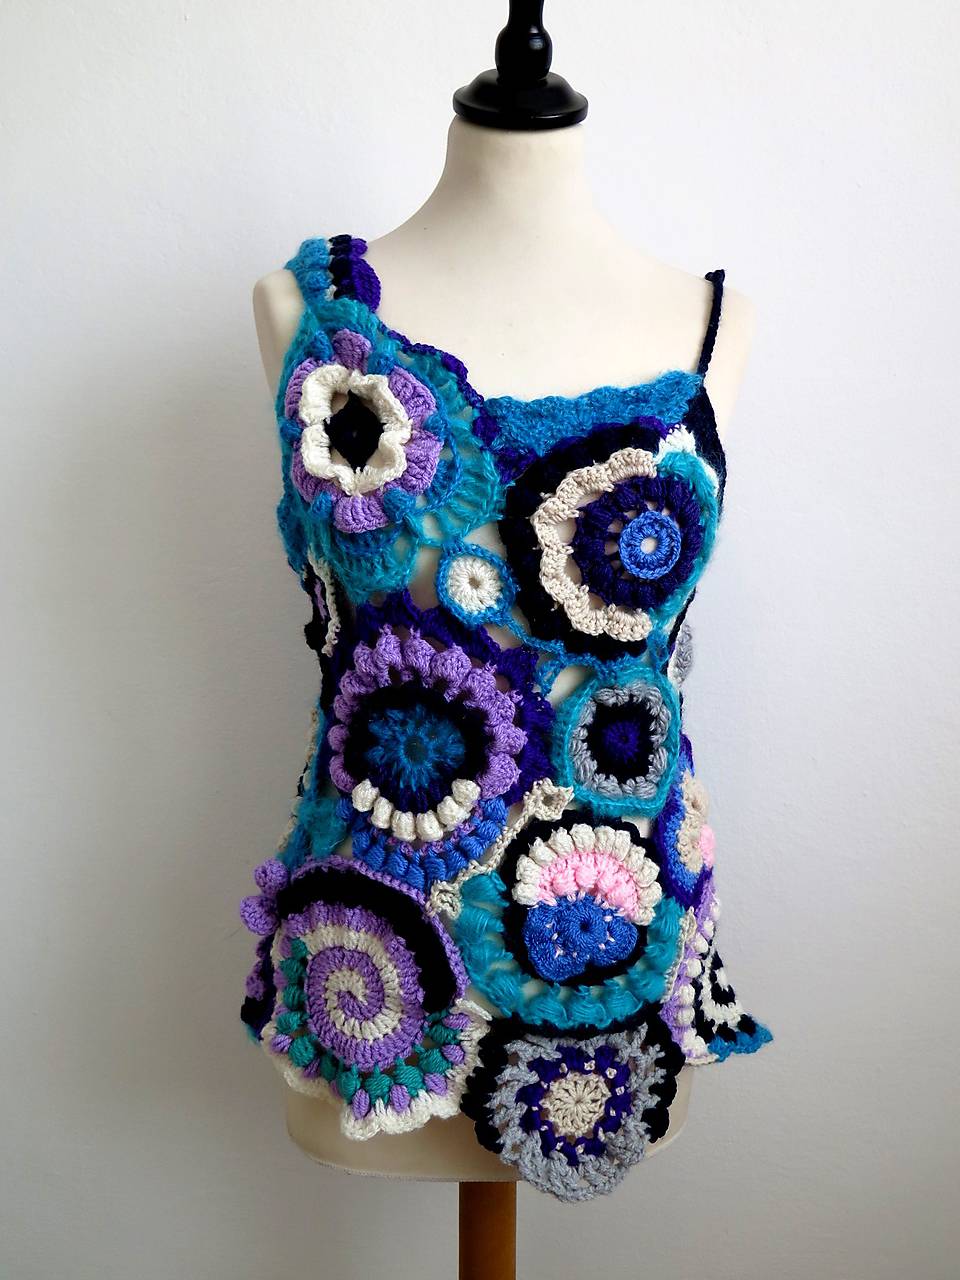 freeform crocheting - vesta 